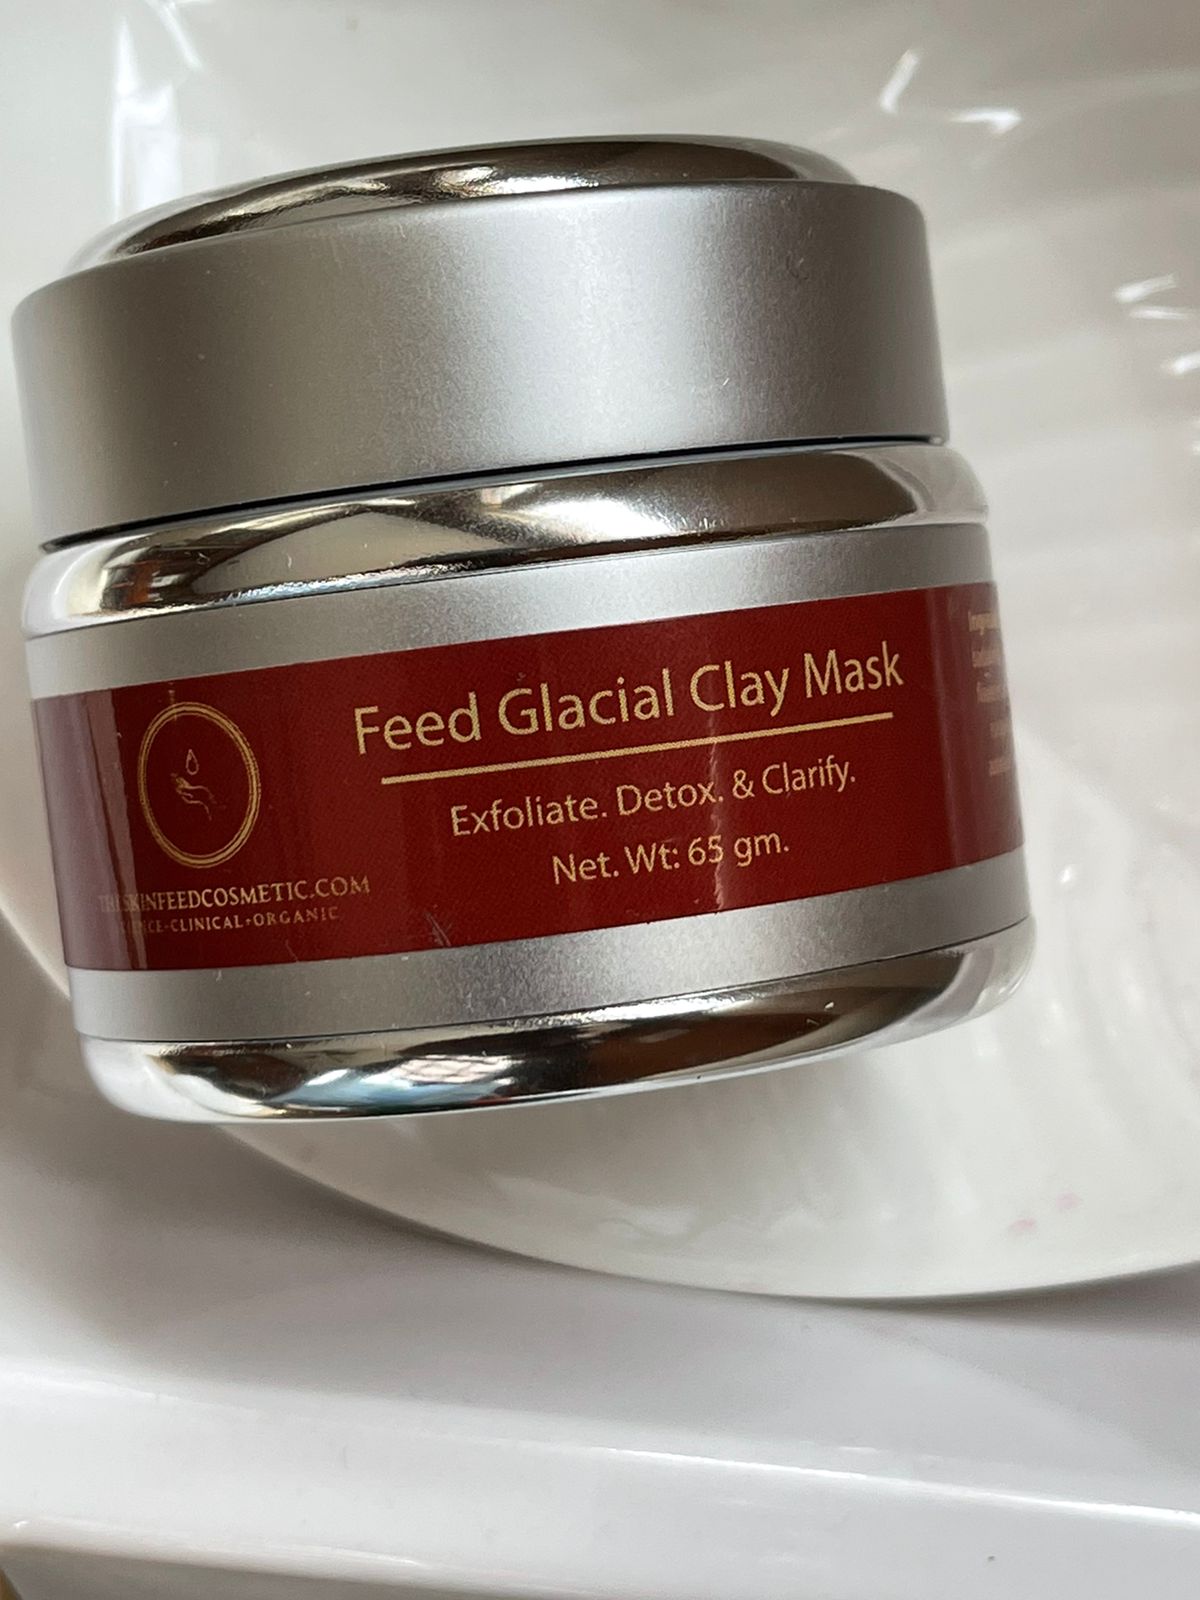 Feed Glacial Clay Mask.